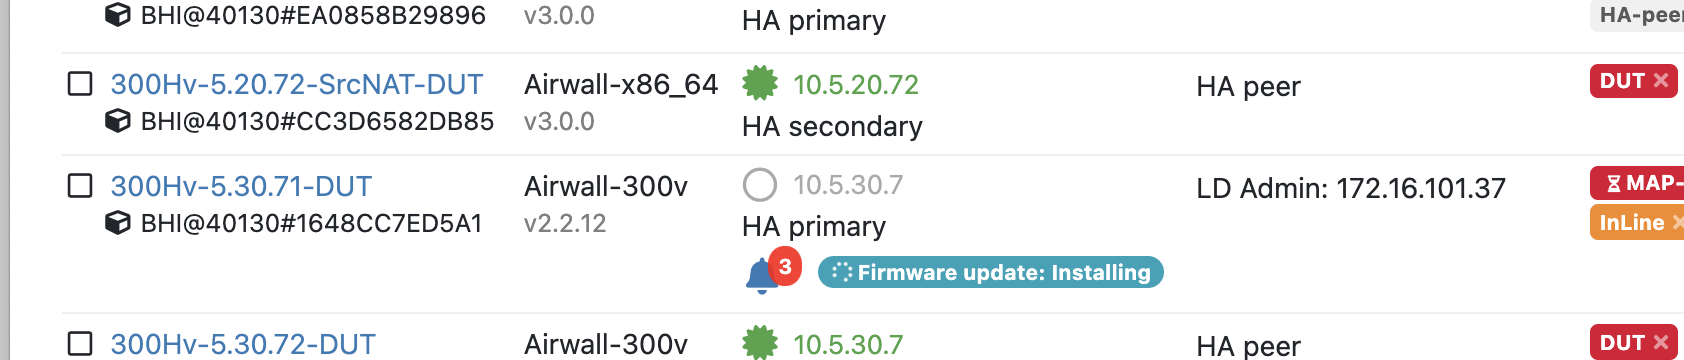 Airwalls page showing a firmware update in progress